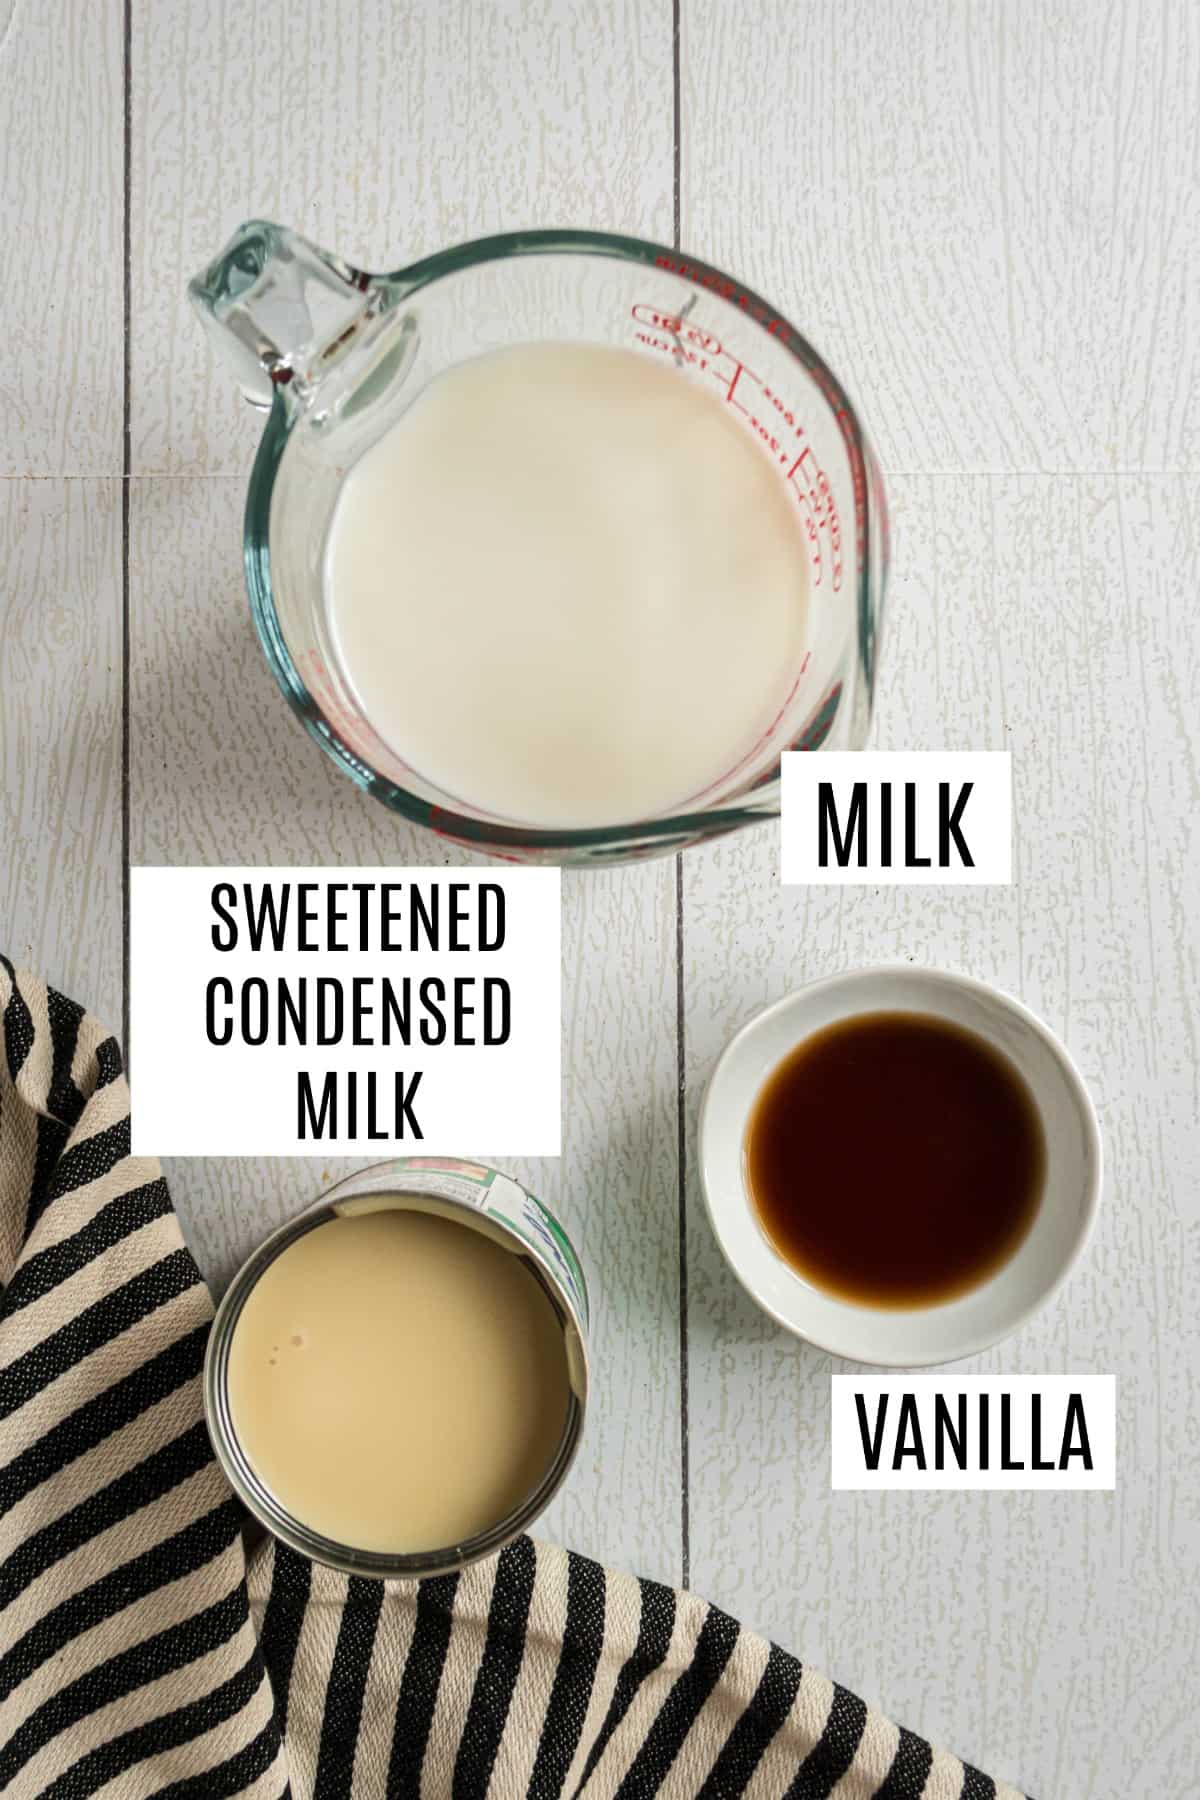 https://www.shugarysweets.com/wp-content/uploads/2018/07/ingredients-french-vanilla-creamer.jpg